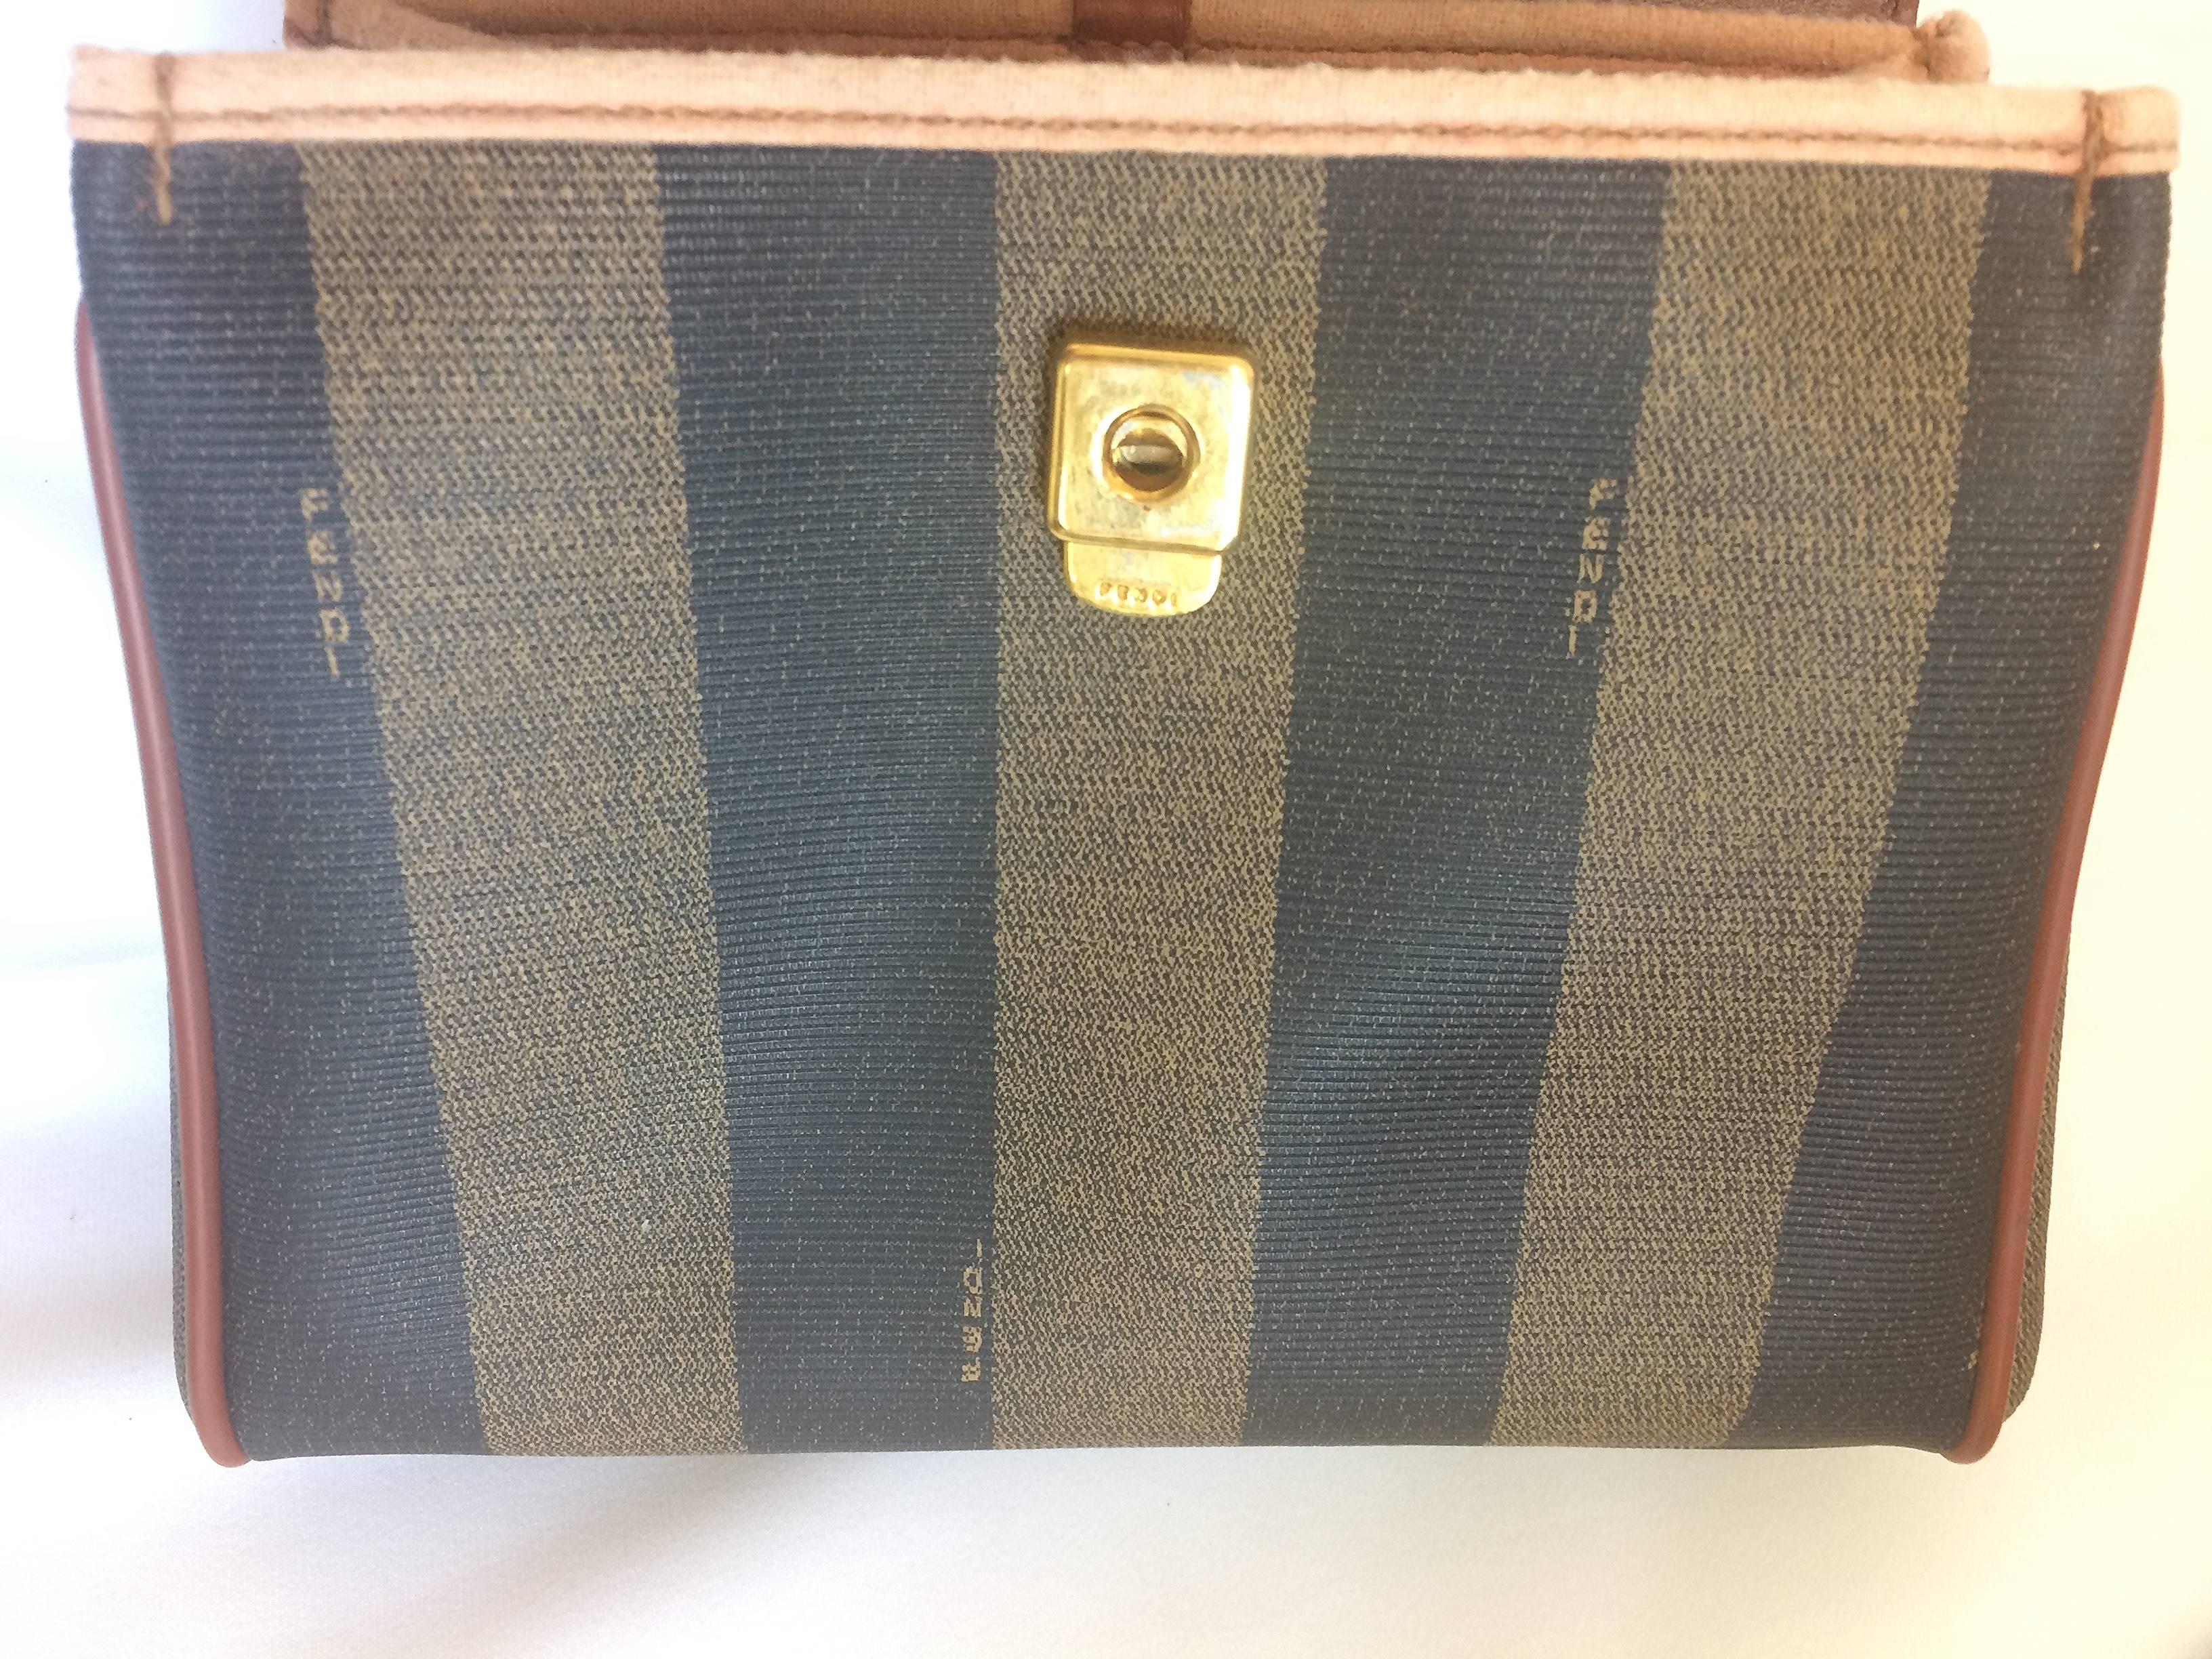 Vintage FENDI kelly bag style mini handbag in pecan stripes and brown leather 2